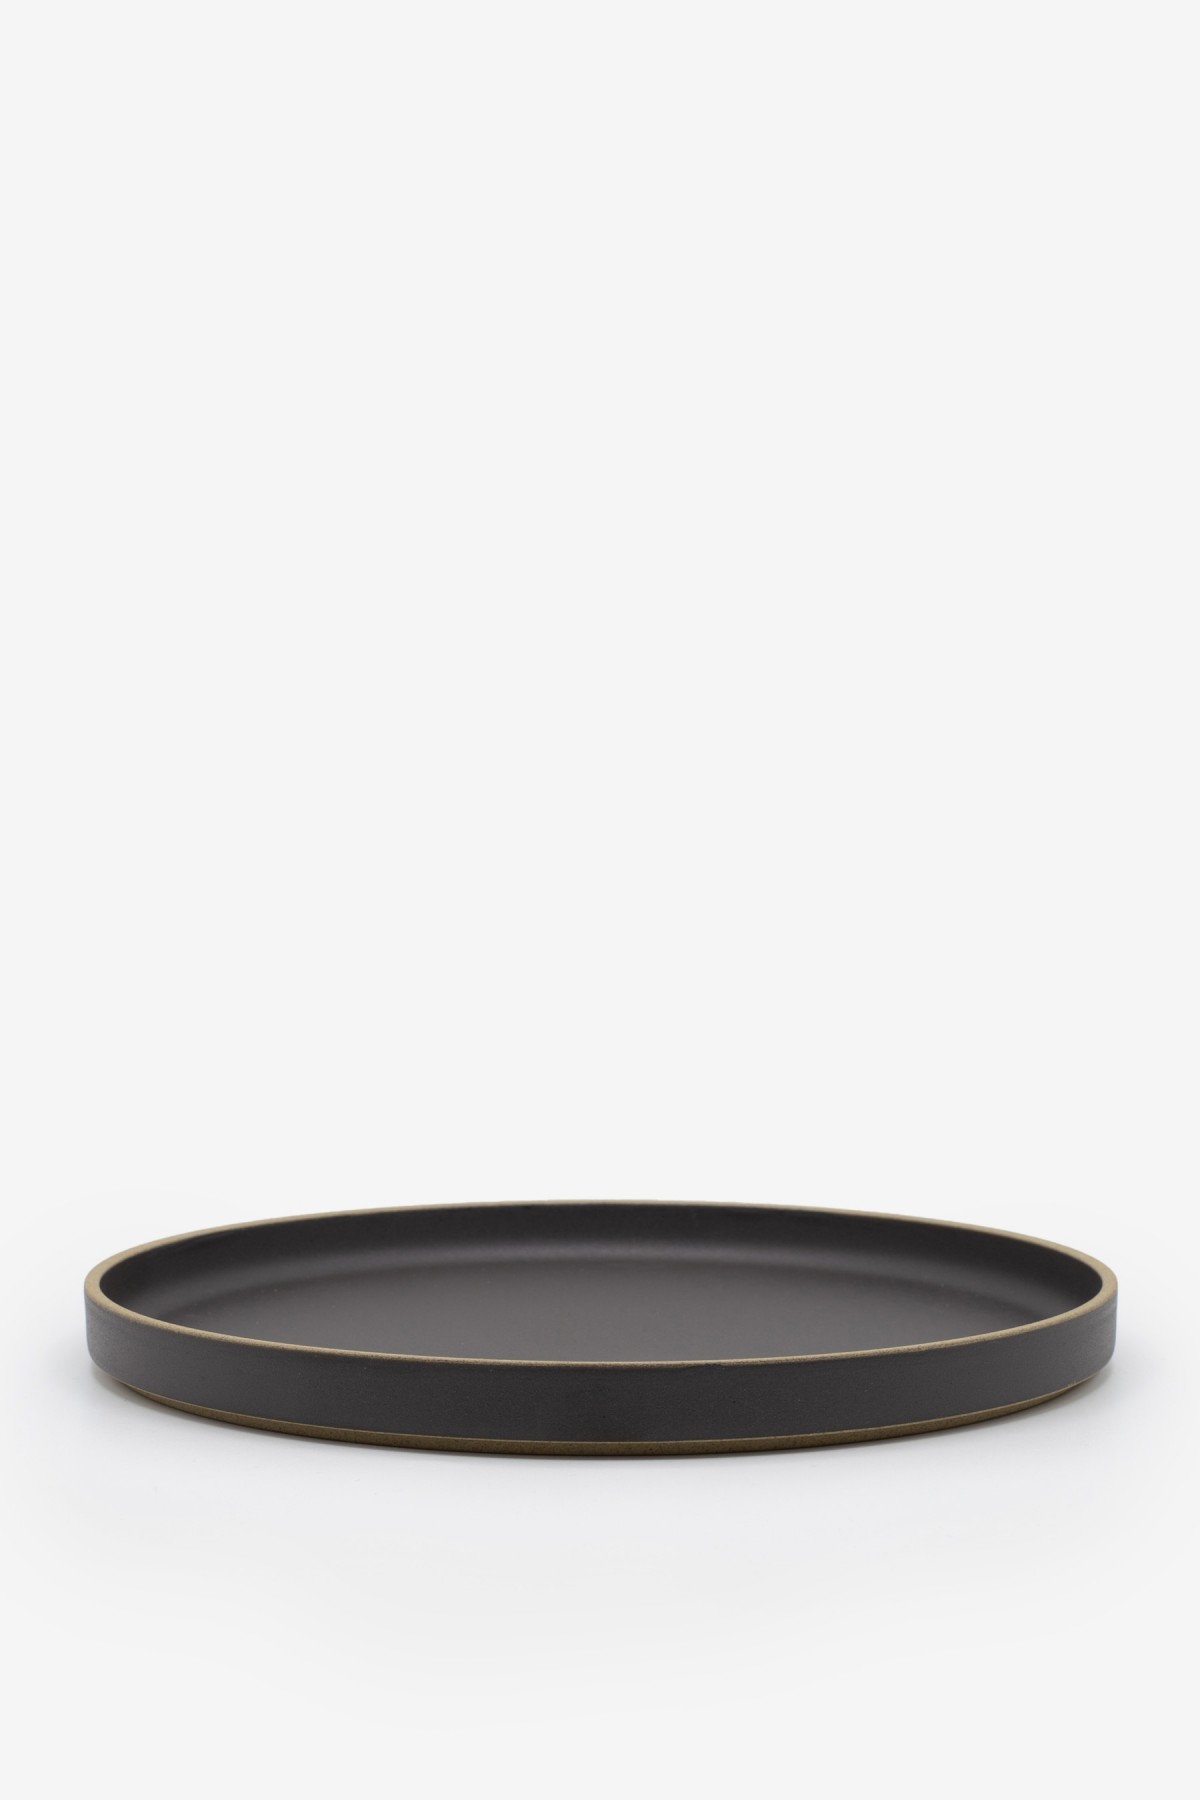 Hasami Porcelain Plate 255 in Black